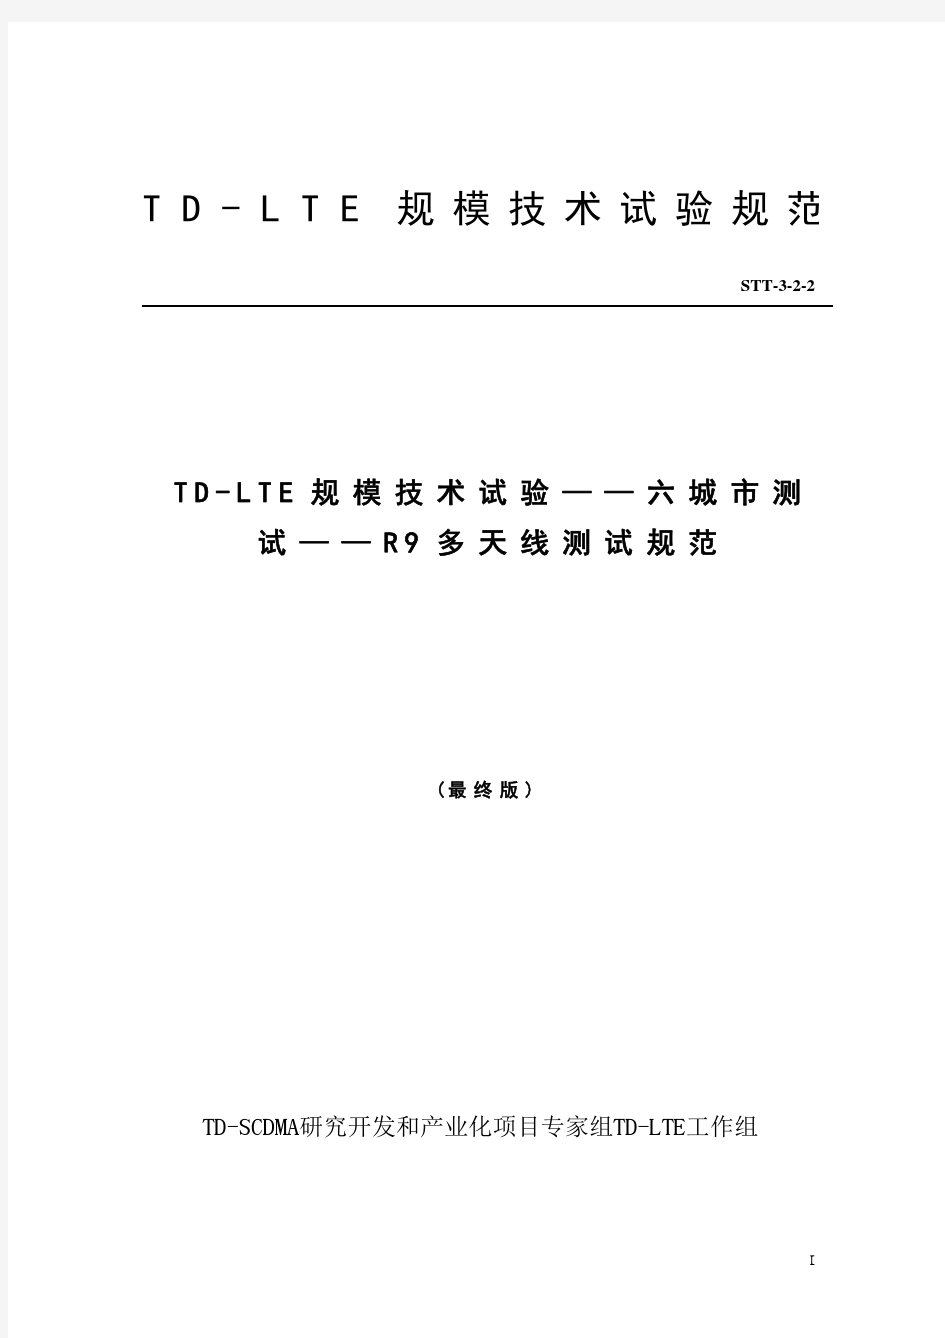 STT-3-2-2《TD-LTE规模技术试验——六城市测试——R9多天线测试规范》(最终版)